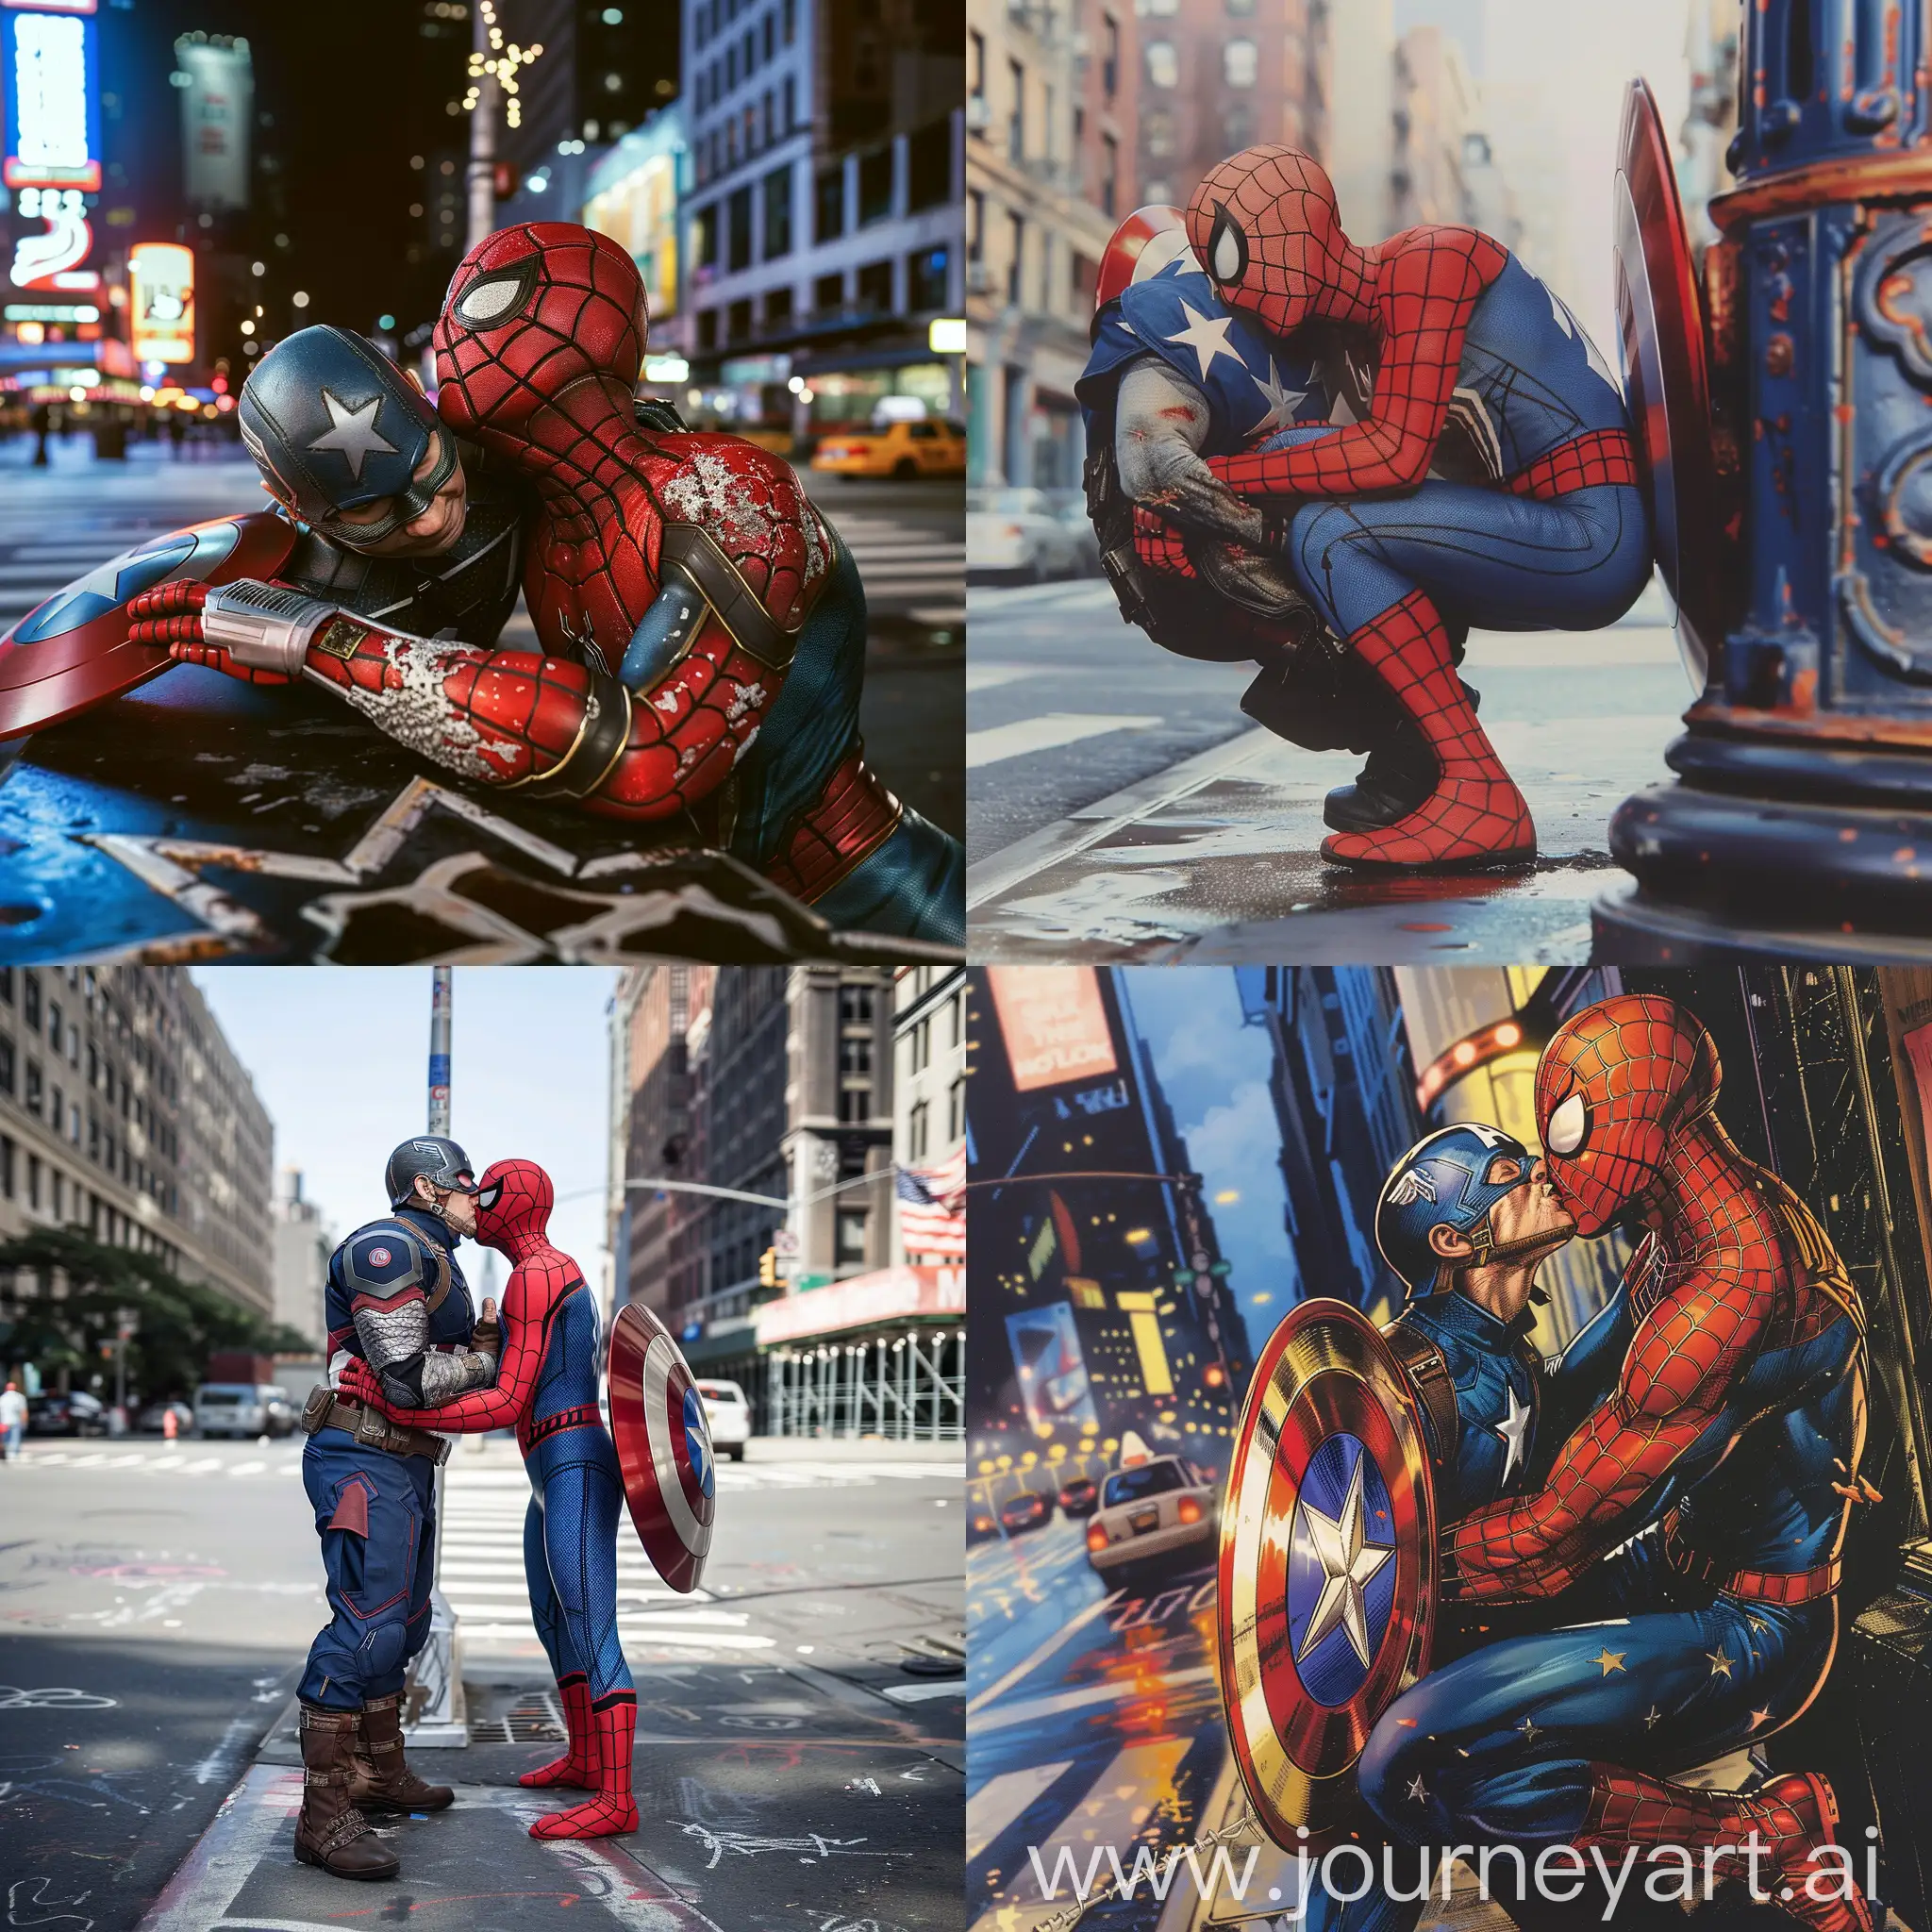 Spiderman besando a el Capitan America en una esquina de New York.